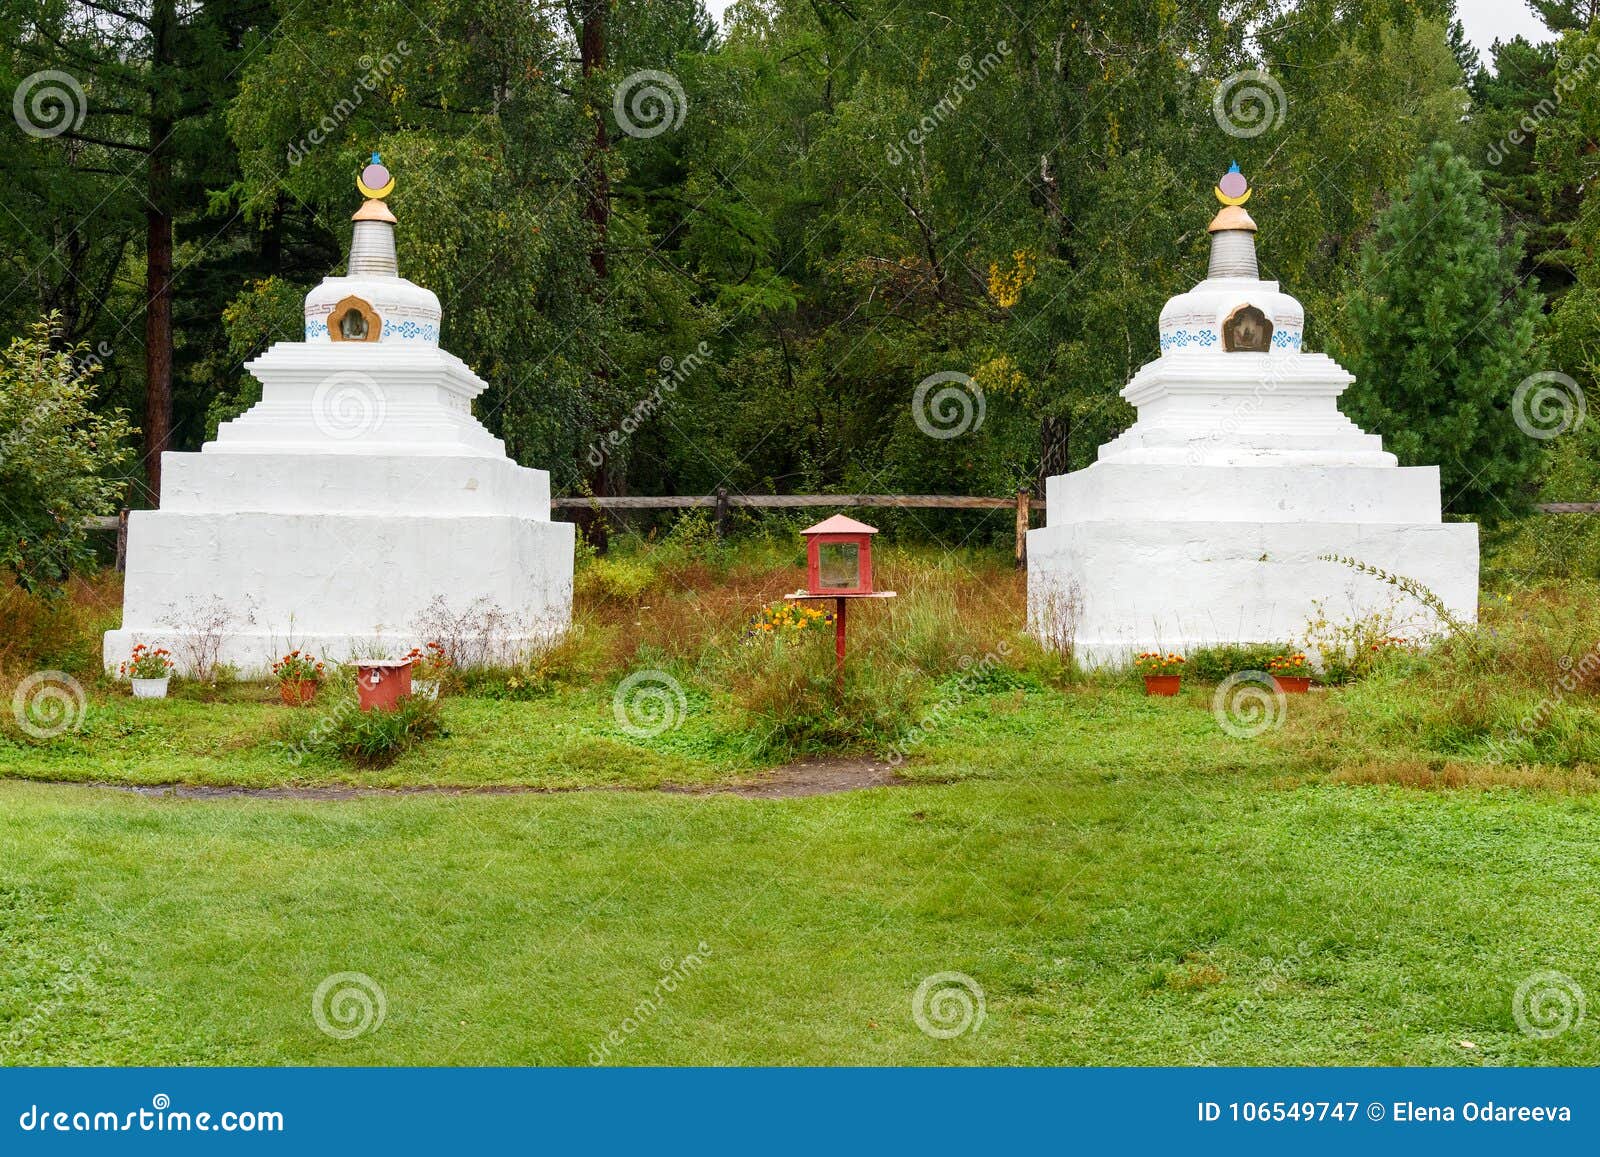 Stupa buddista Bodhidharma datsan buddista in Arshan La Russia. Stupa buddista Bodhidharma datsan buddista al piede della montagna di Mundarga della gamma di Tunka in Arshan La Buriazia La Russia